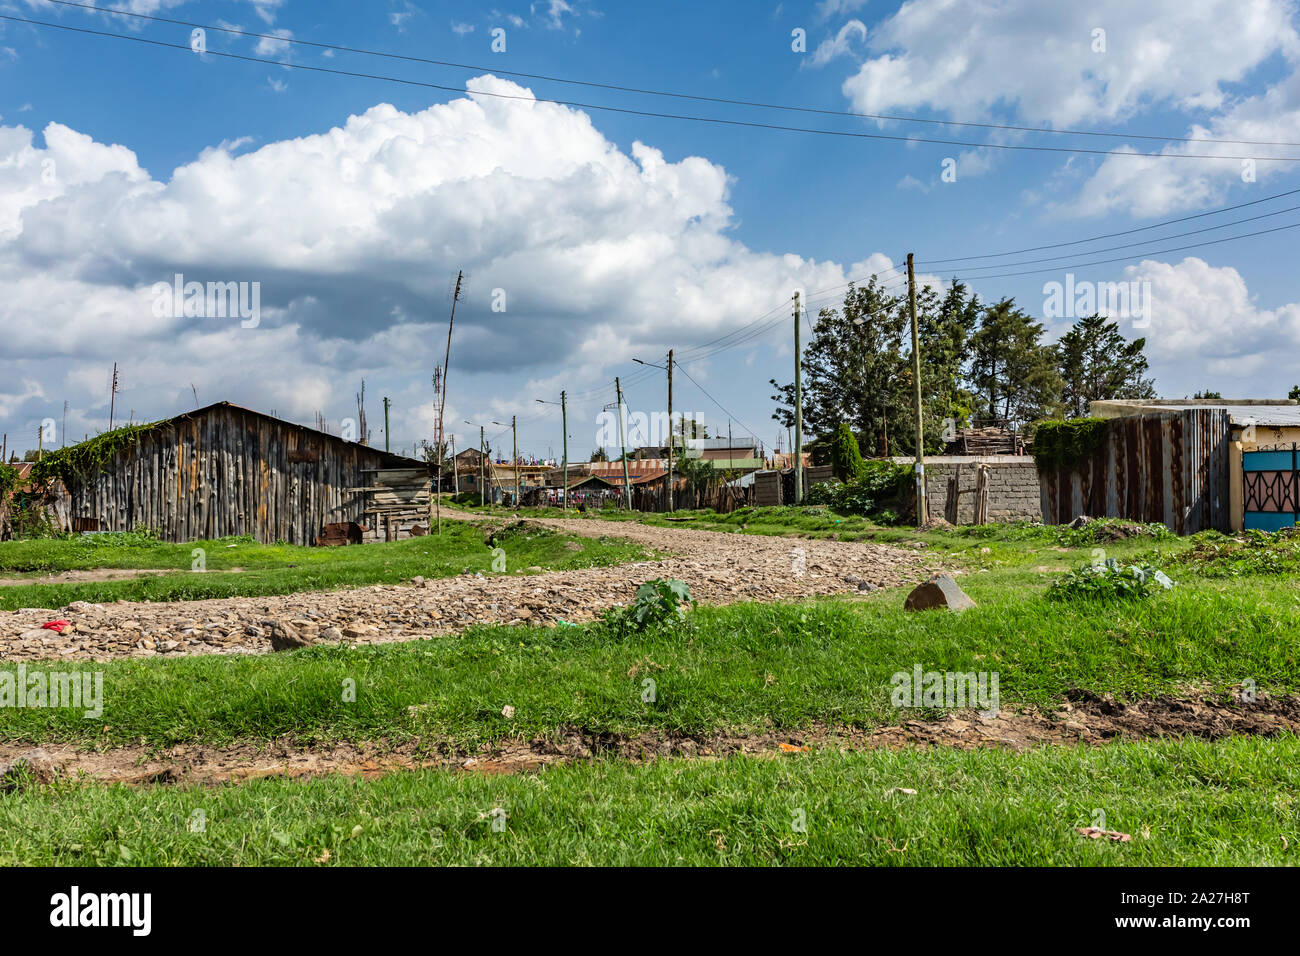 Nanyuki, Laikipia County, Kenya – June 19th, 2019: Landscape photograph of stone track surrounded by typical small Kenyan homes in Nanyuki outskirts. Stock Photo